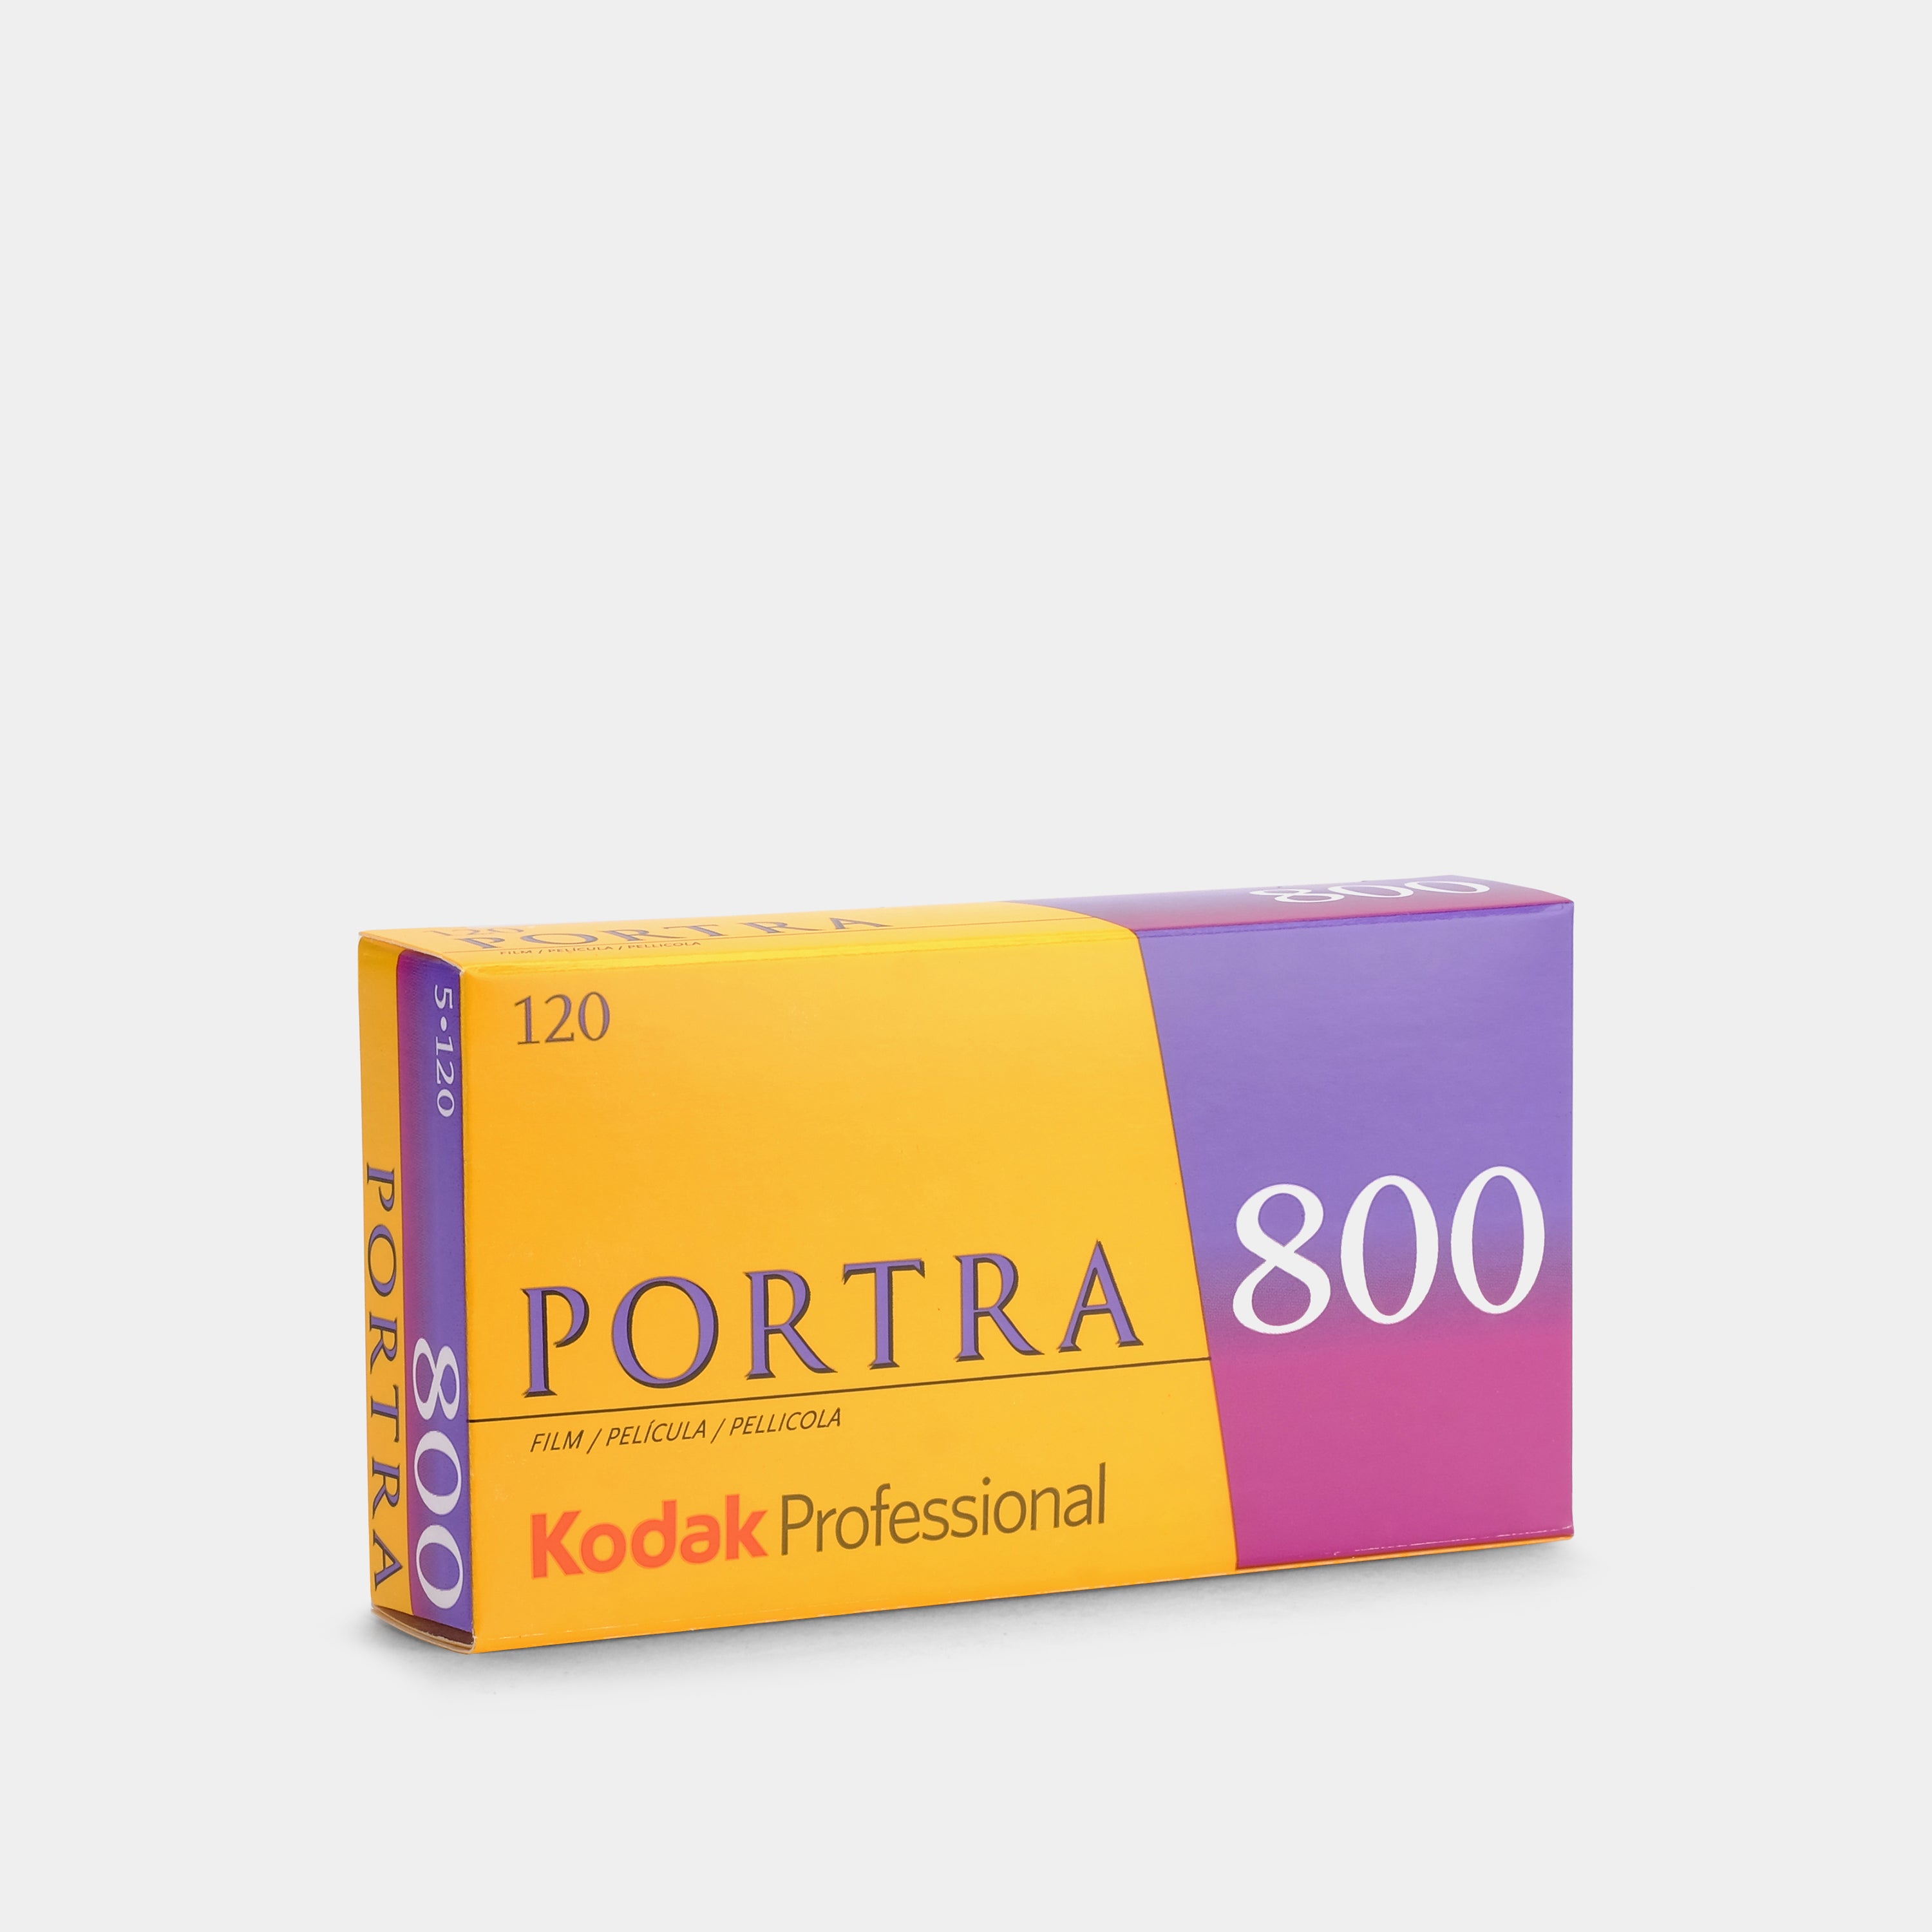 Kodak Professional Portra 800 Color 120 Film - 5 Pack